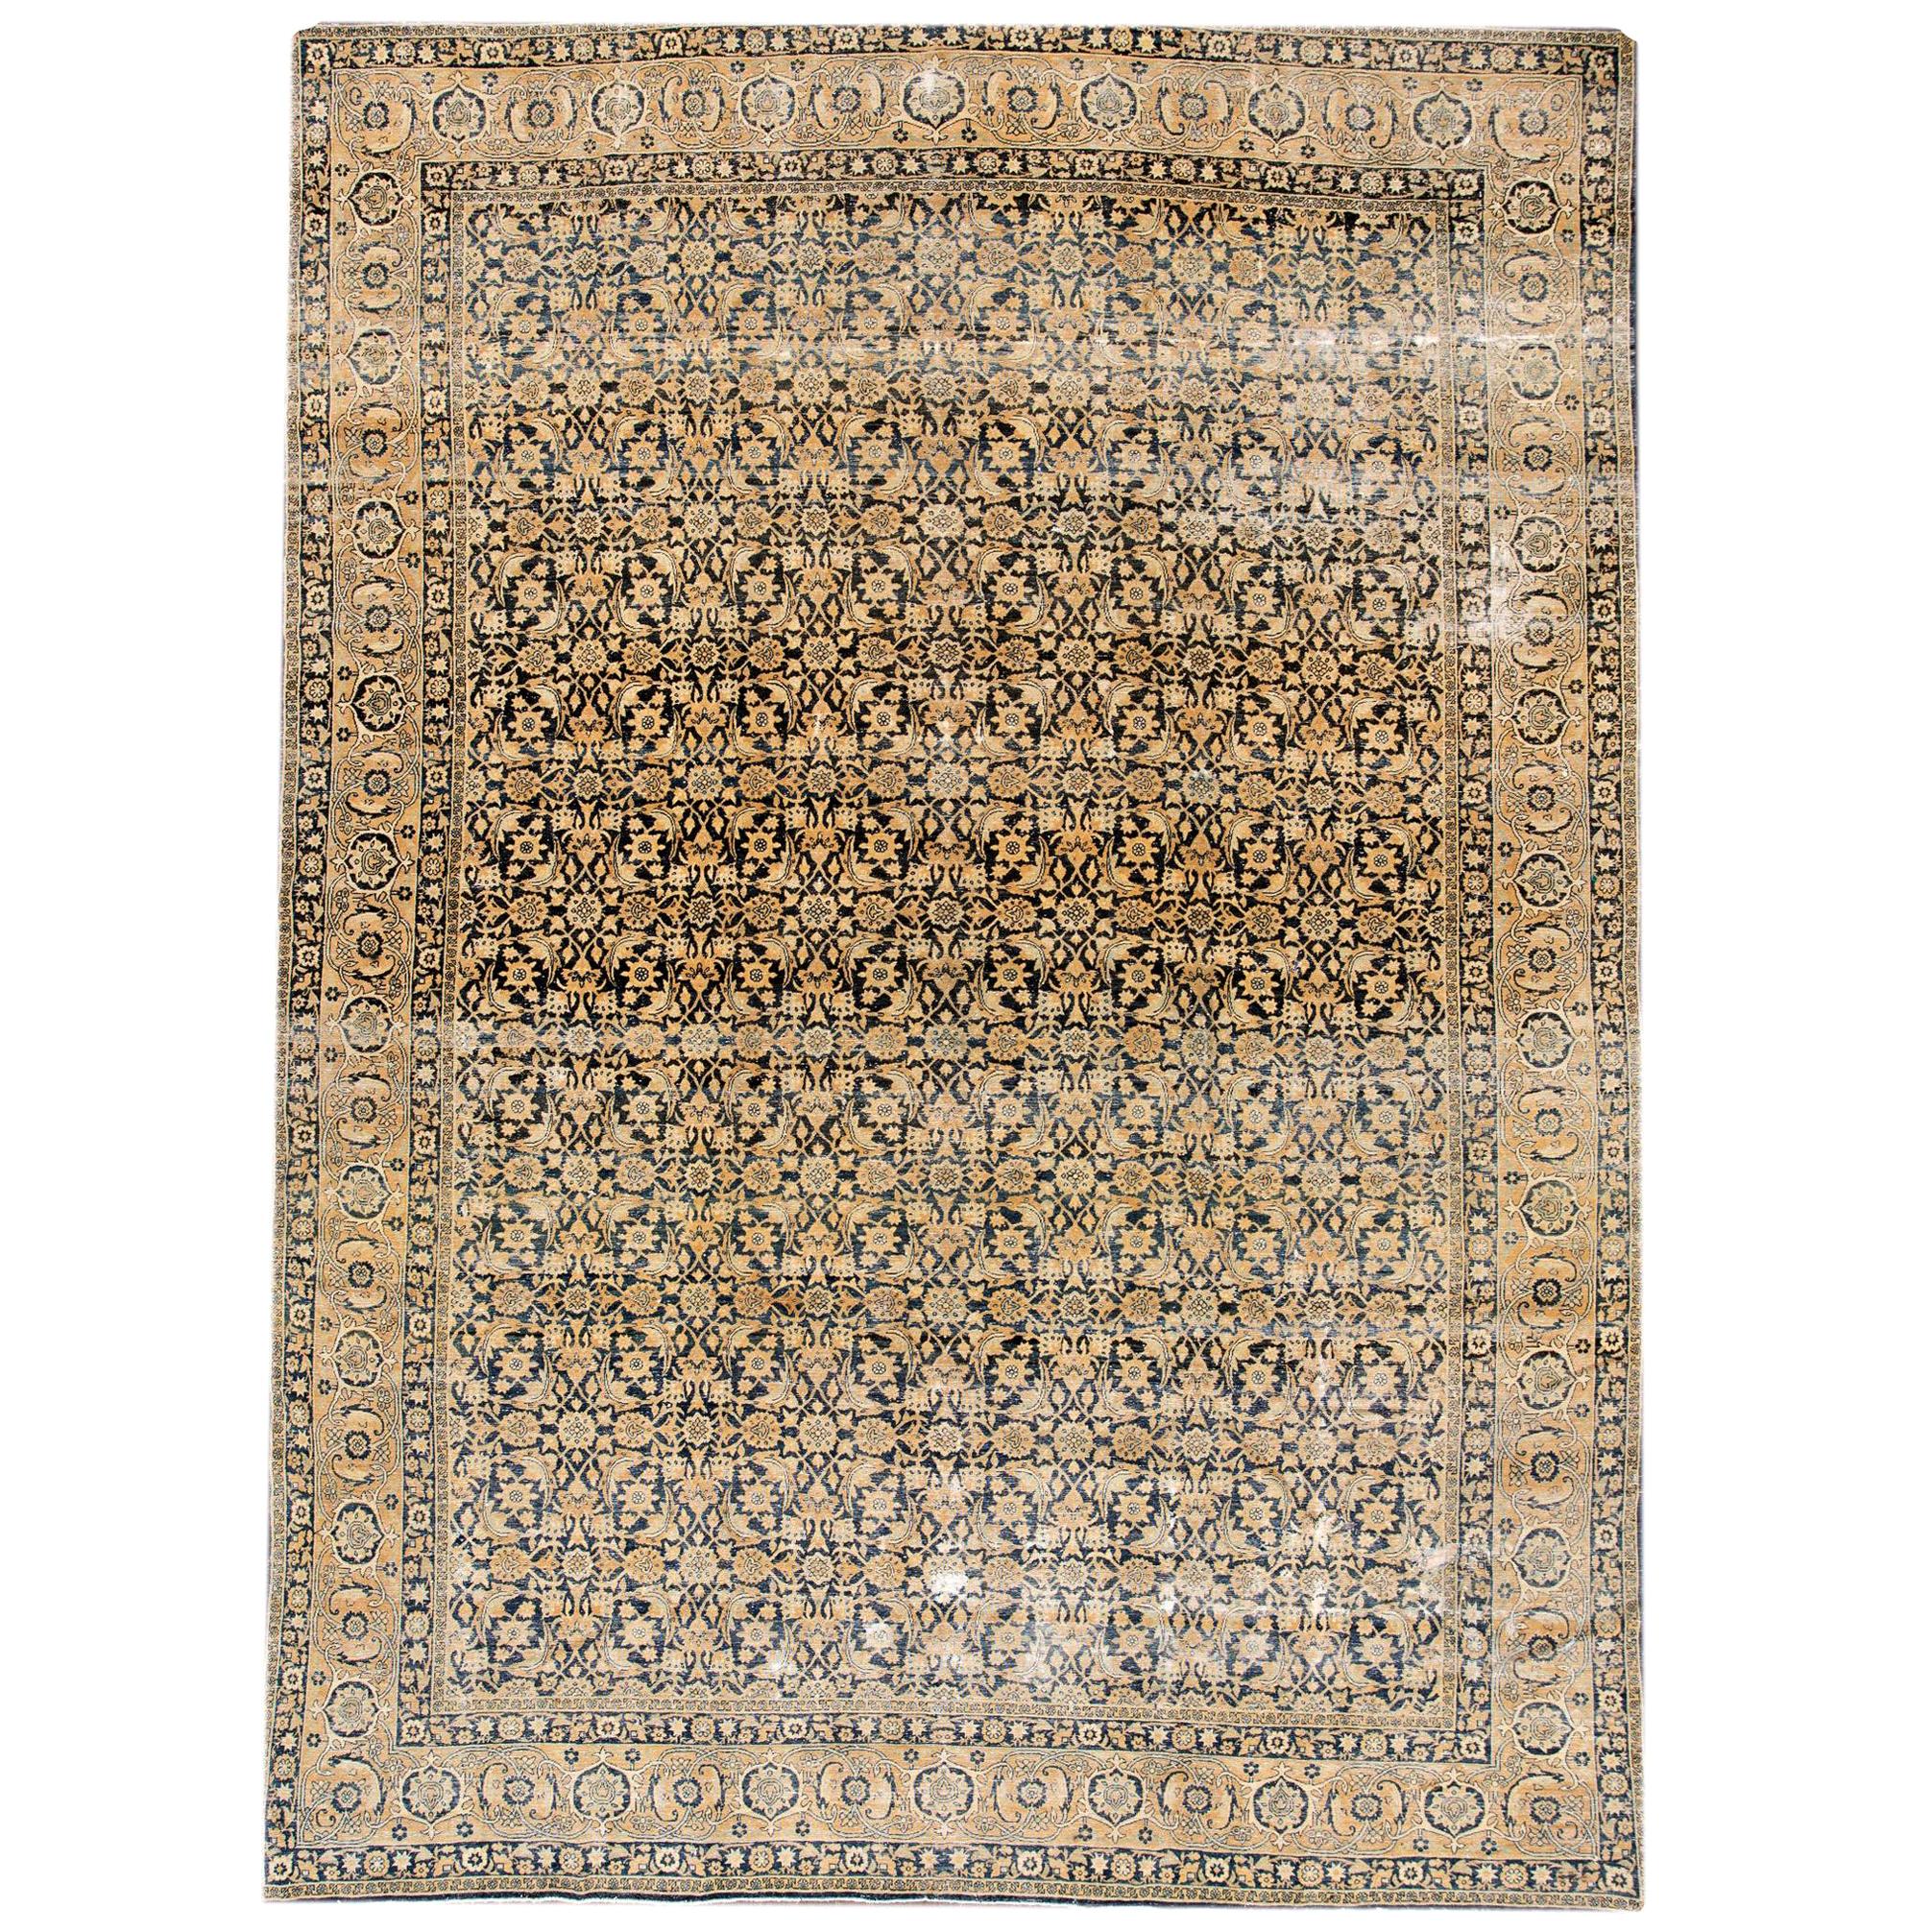 Early 20th Century Antique Tabriz Wool Rug